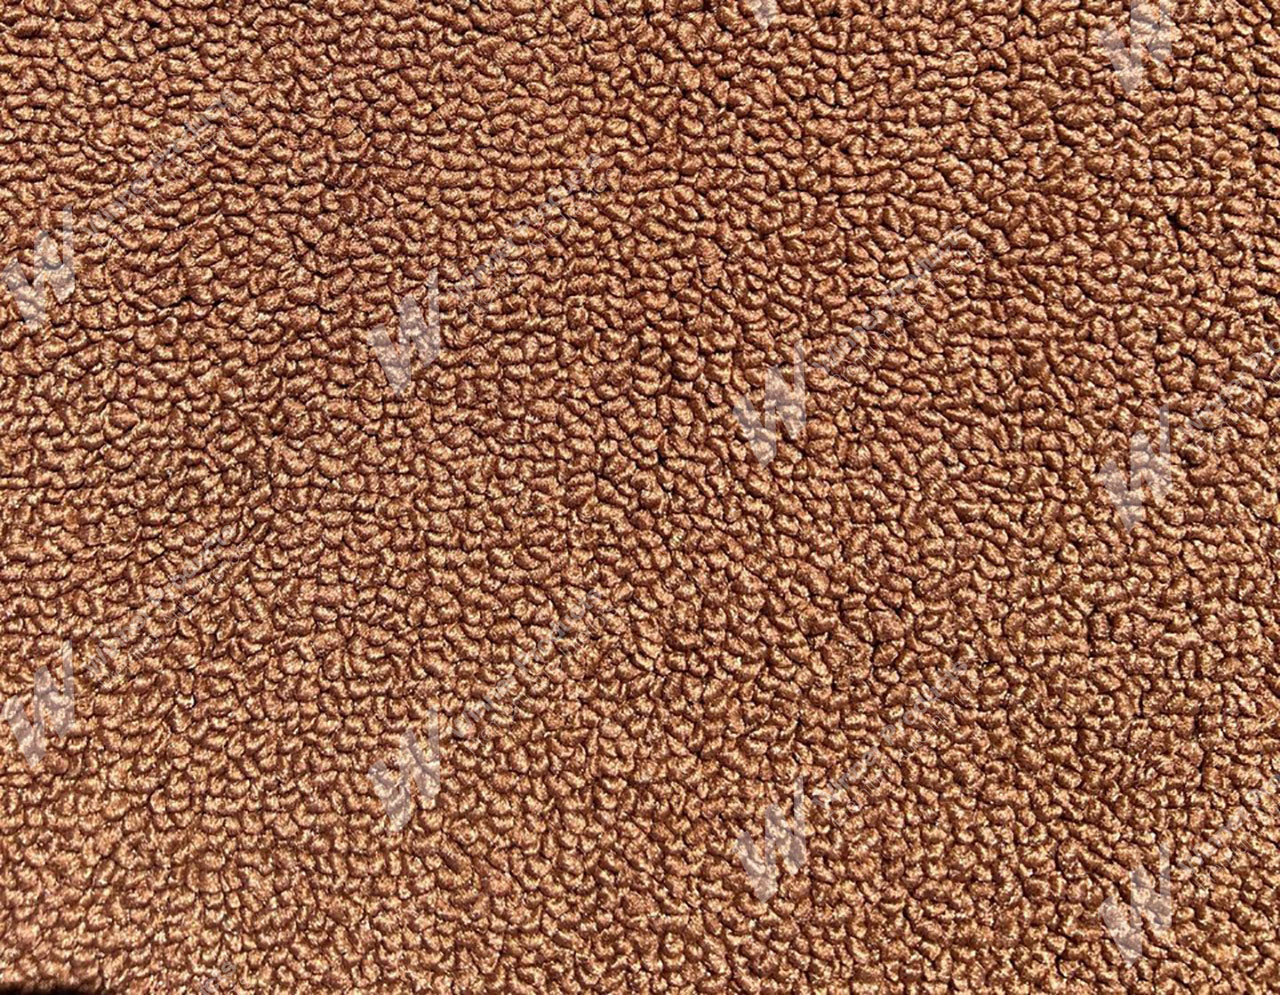 Holden Kingswood WB Kingswood Ute 67X Tan & Cloth Carpet (Image 1 of 1)